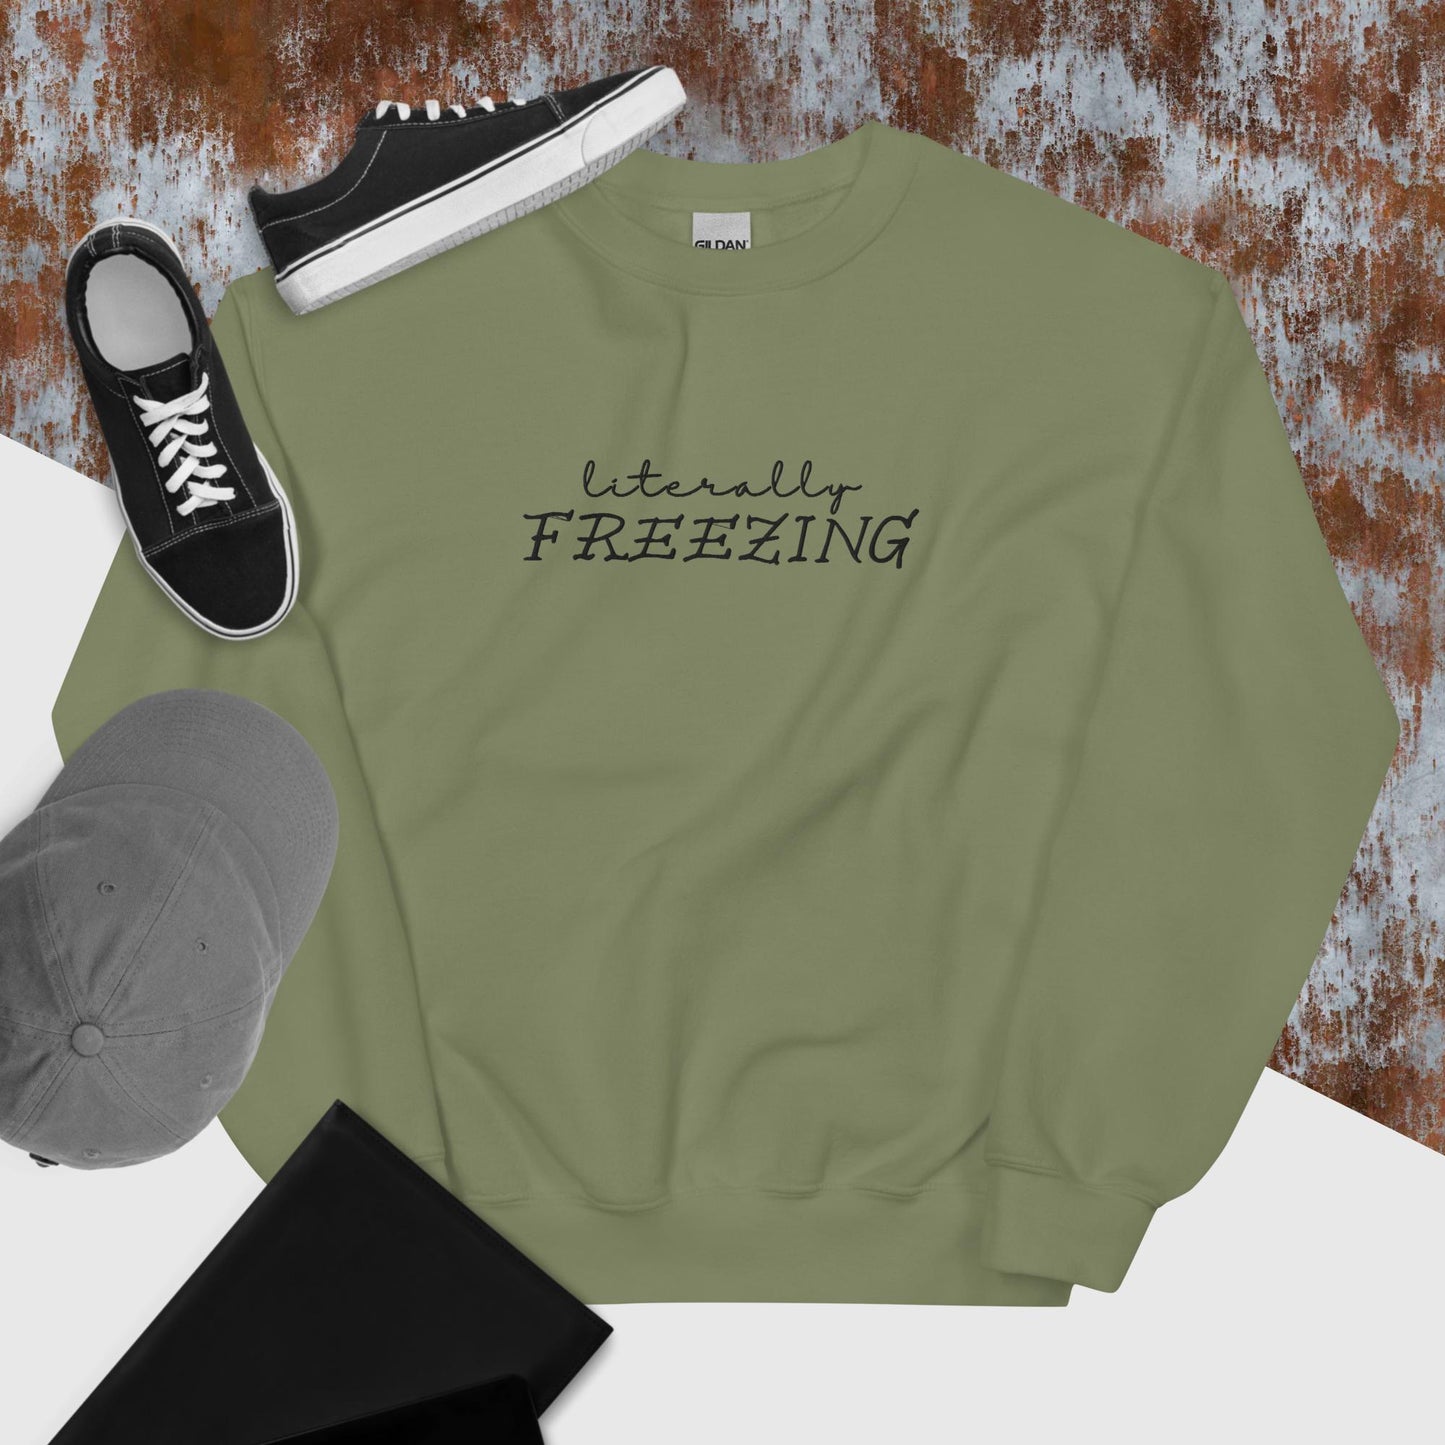 "Literally FREEZING" in Embroidery on Unisex Sweatshirt